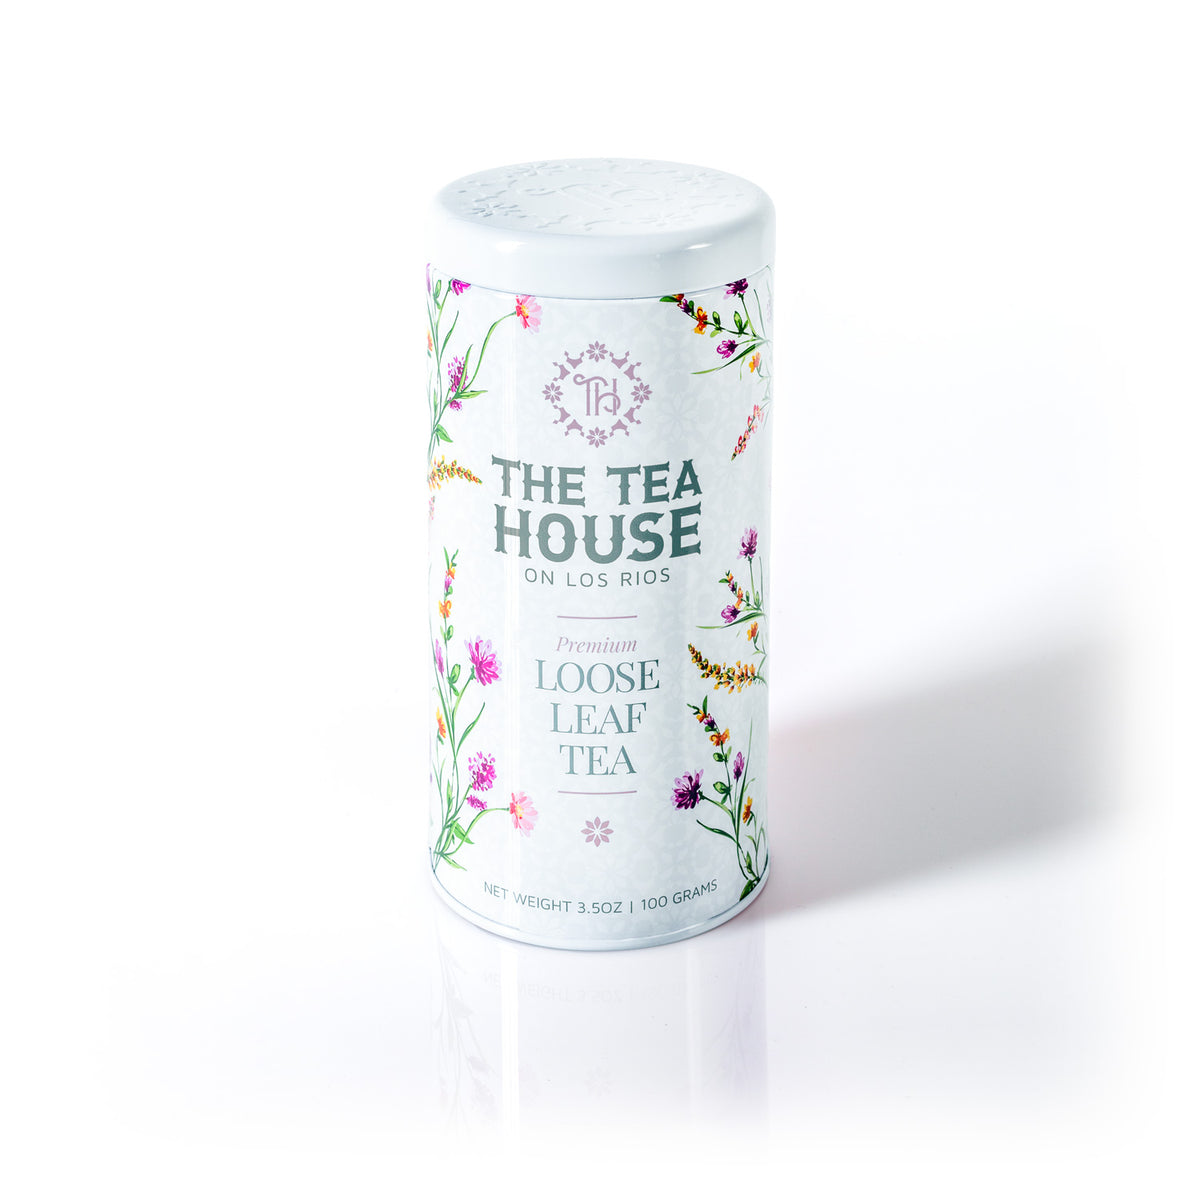 NEW 100g Loose Leaf Tea Tin - The Tea House on Los Rios Collection